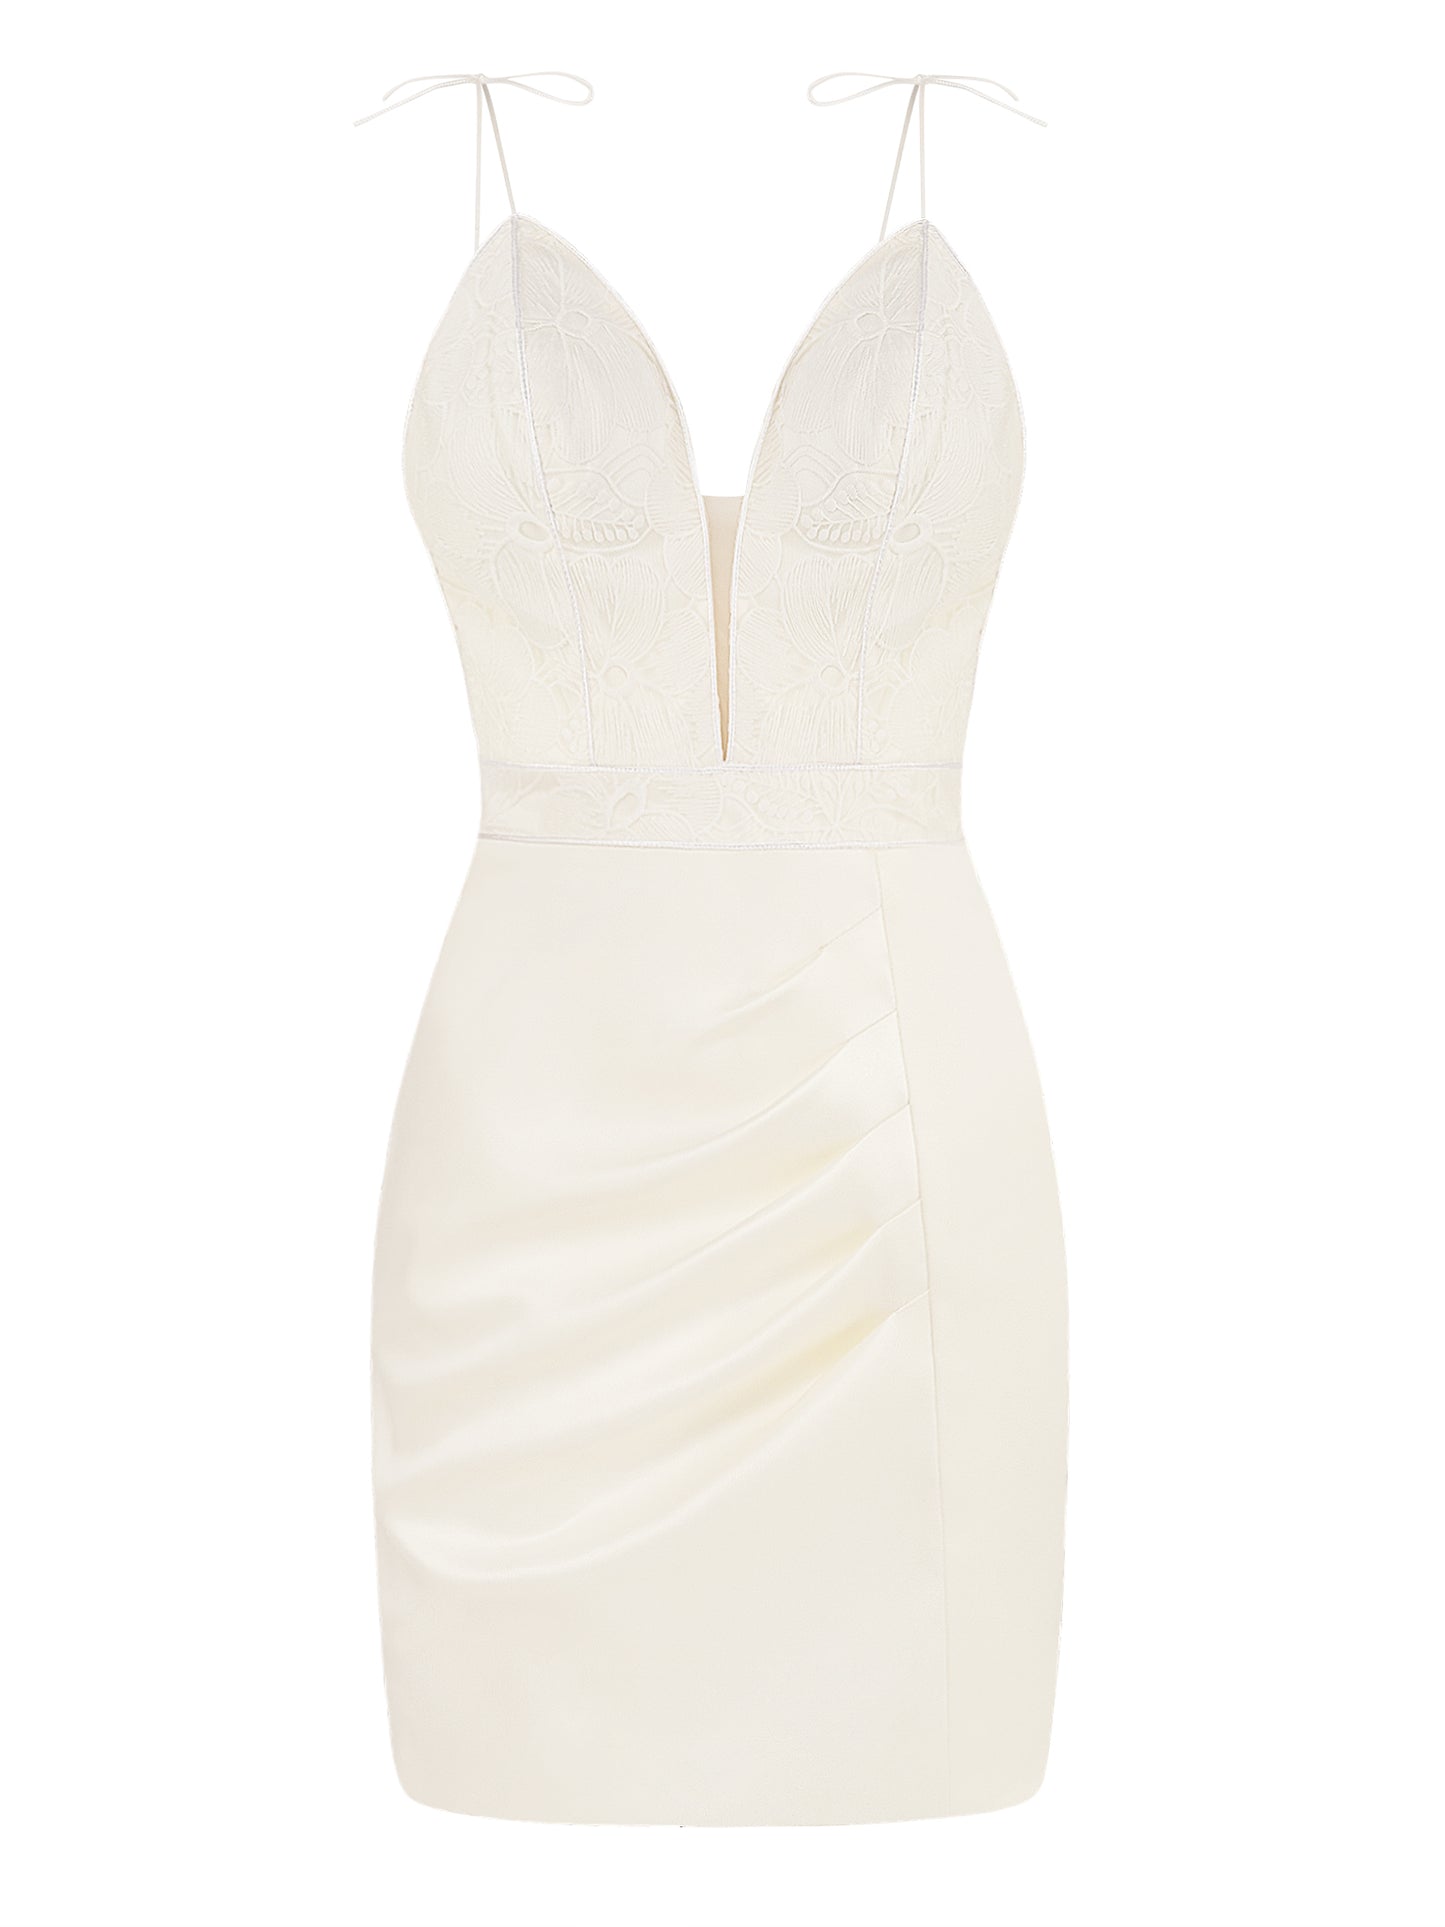 White Heaven Embroidered Organza Mini Dress by Tia Dorraine Women's Luxury Fashion Designer Clothing Brand